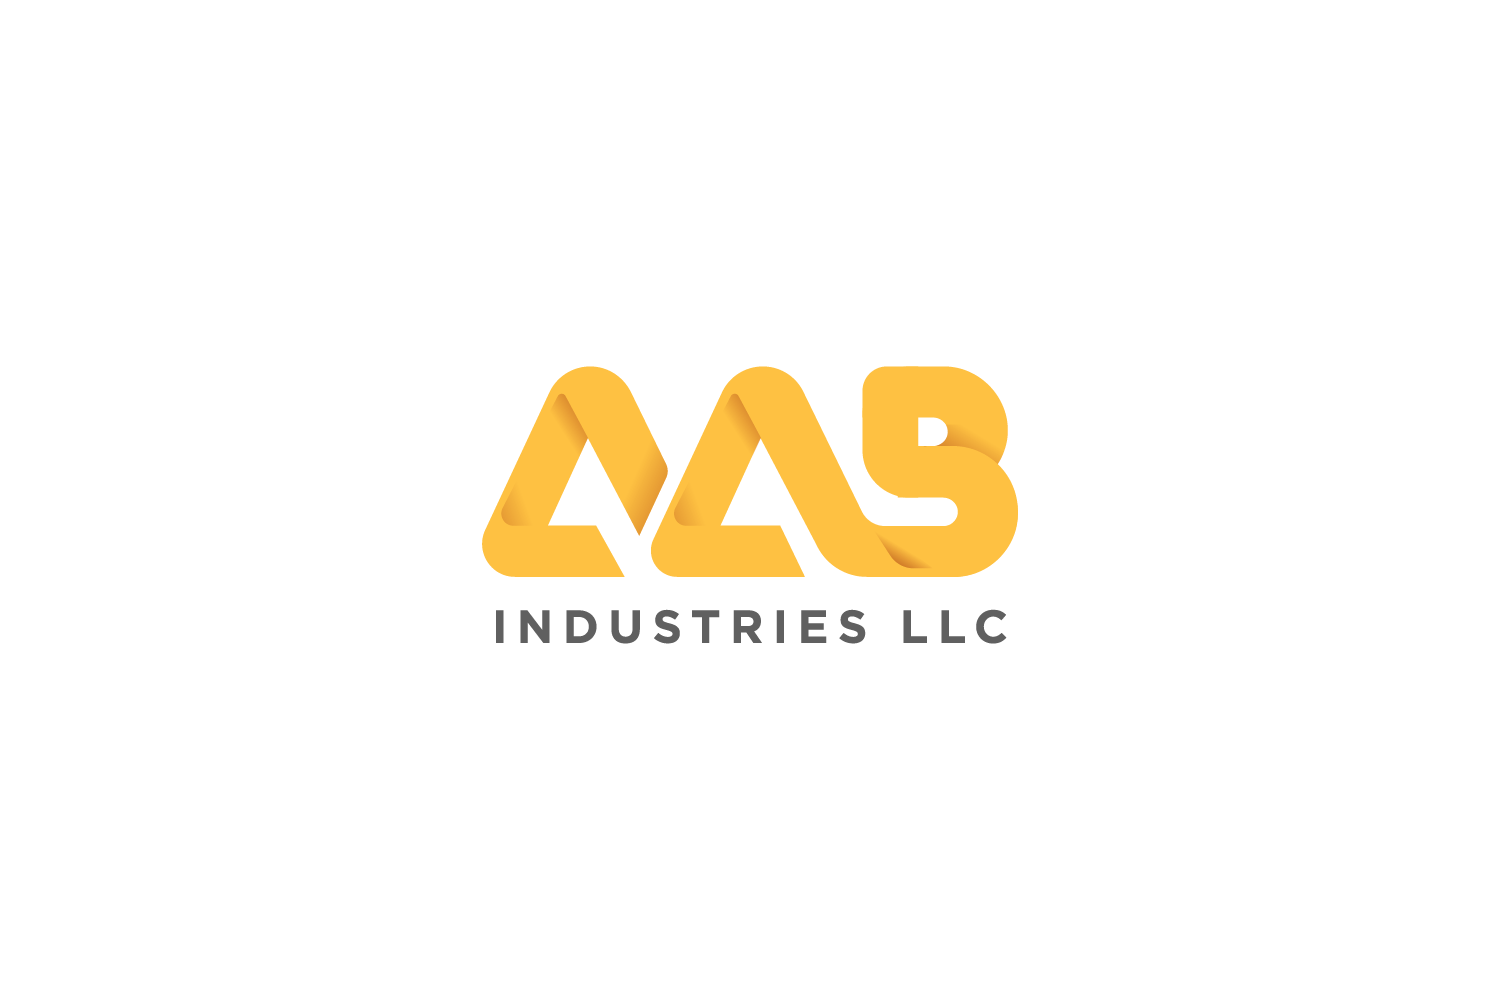 AAB Industries LLC